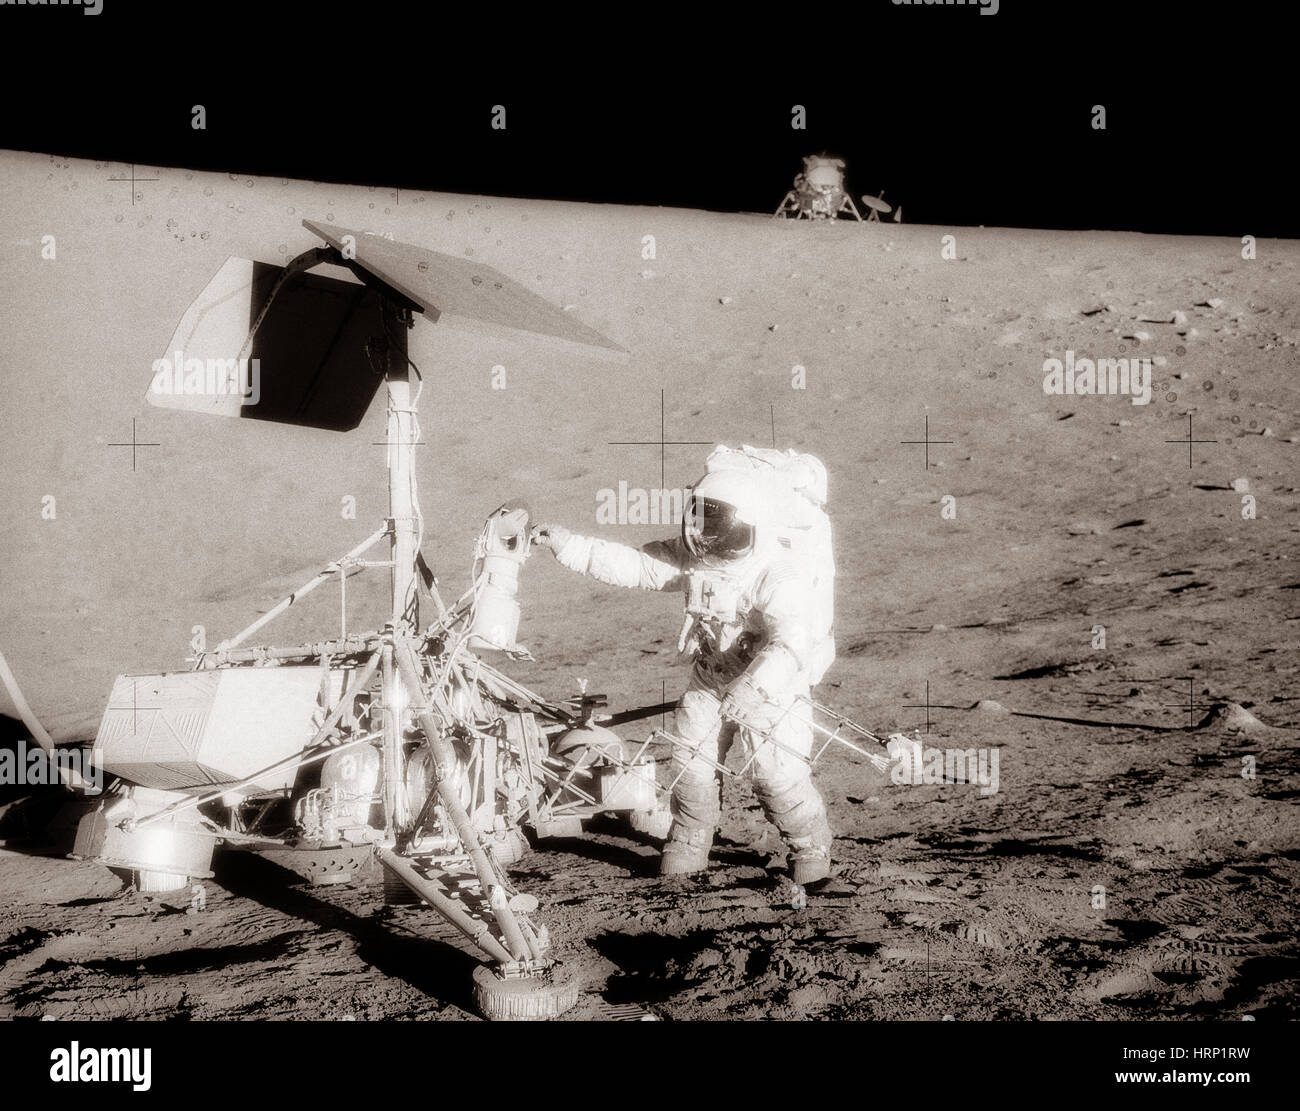 Charles Conrad sur la lune, Apollo 12 Banque D'Images